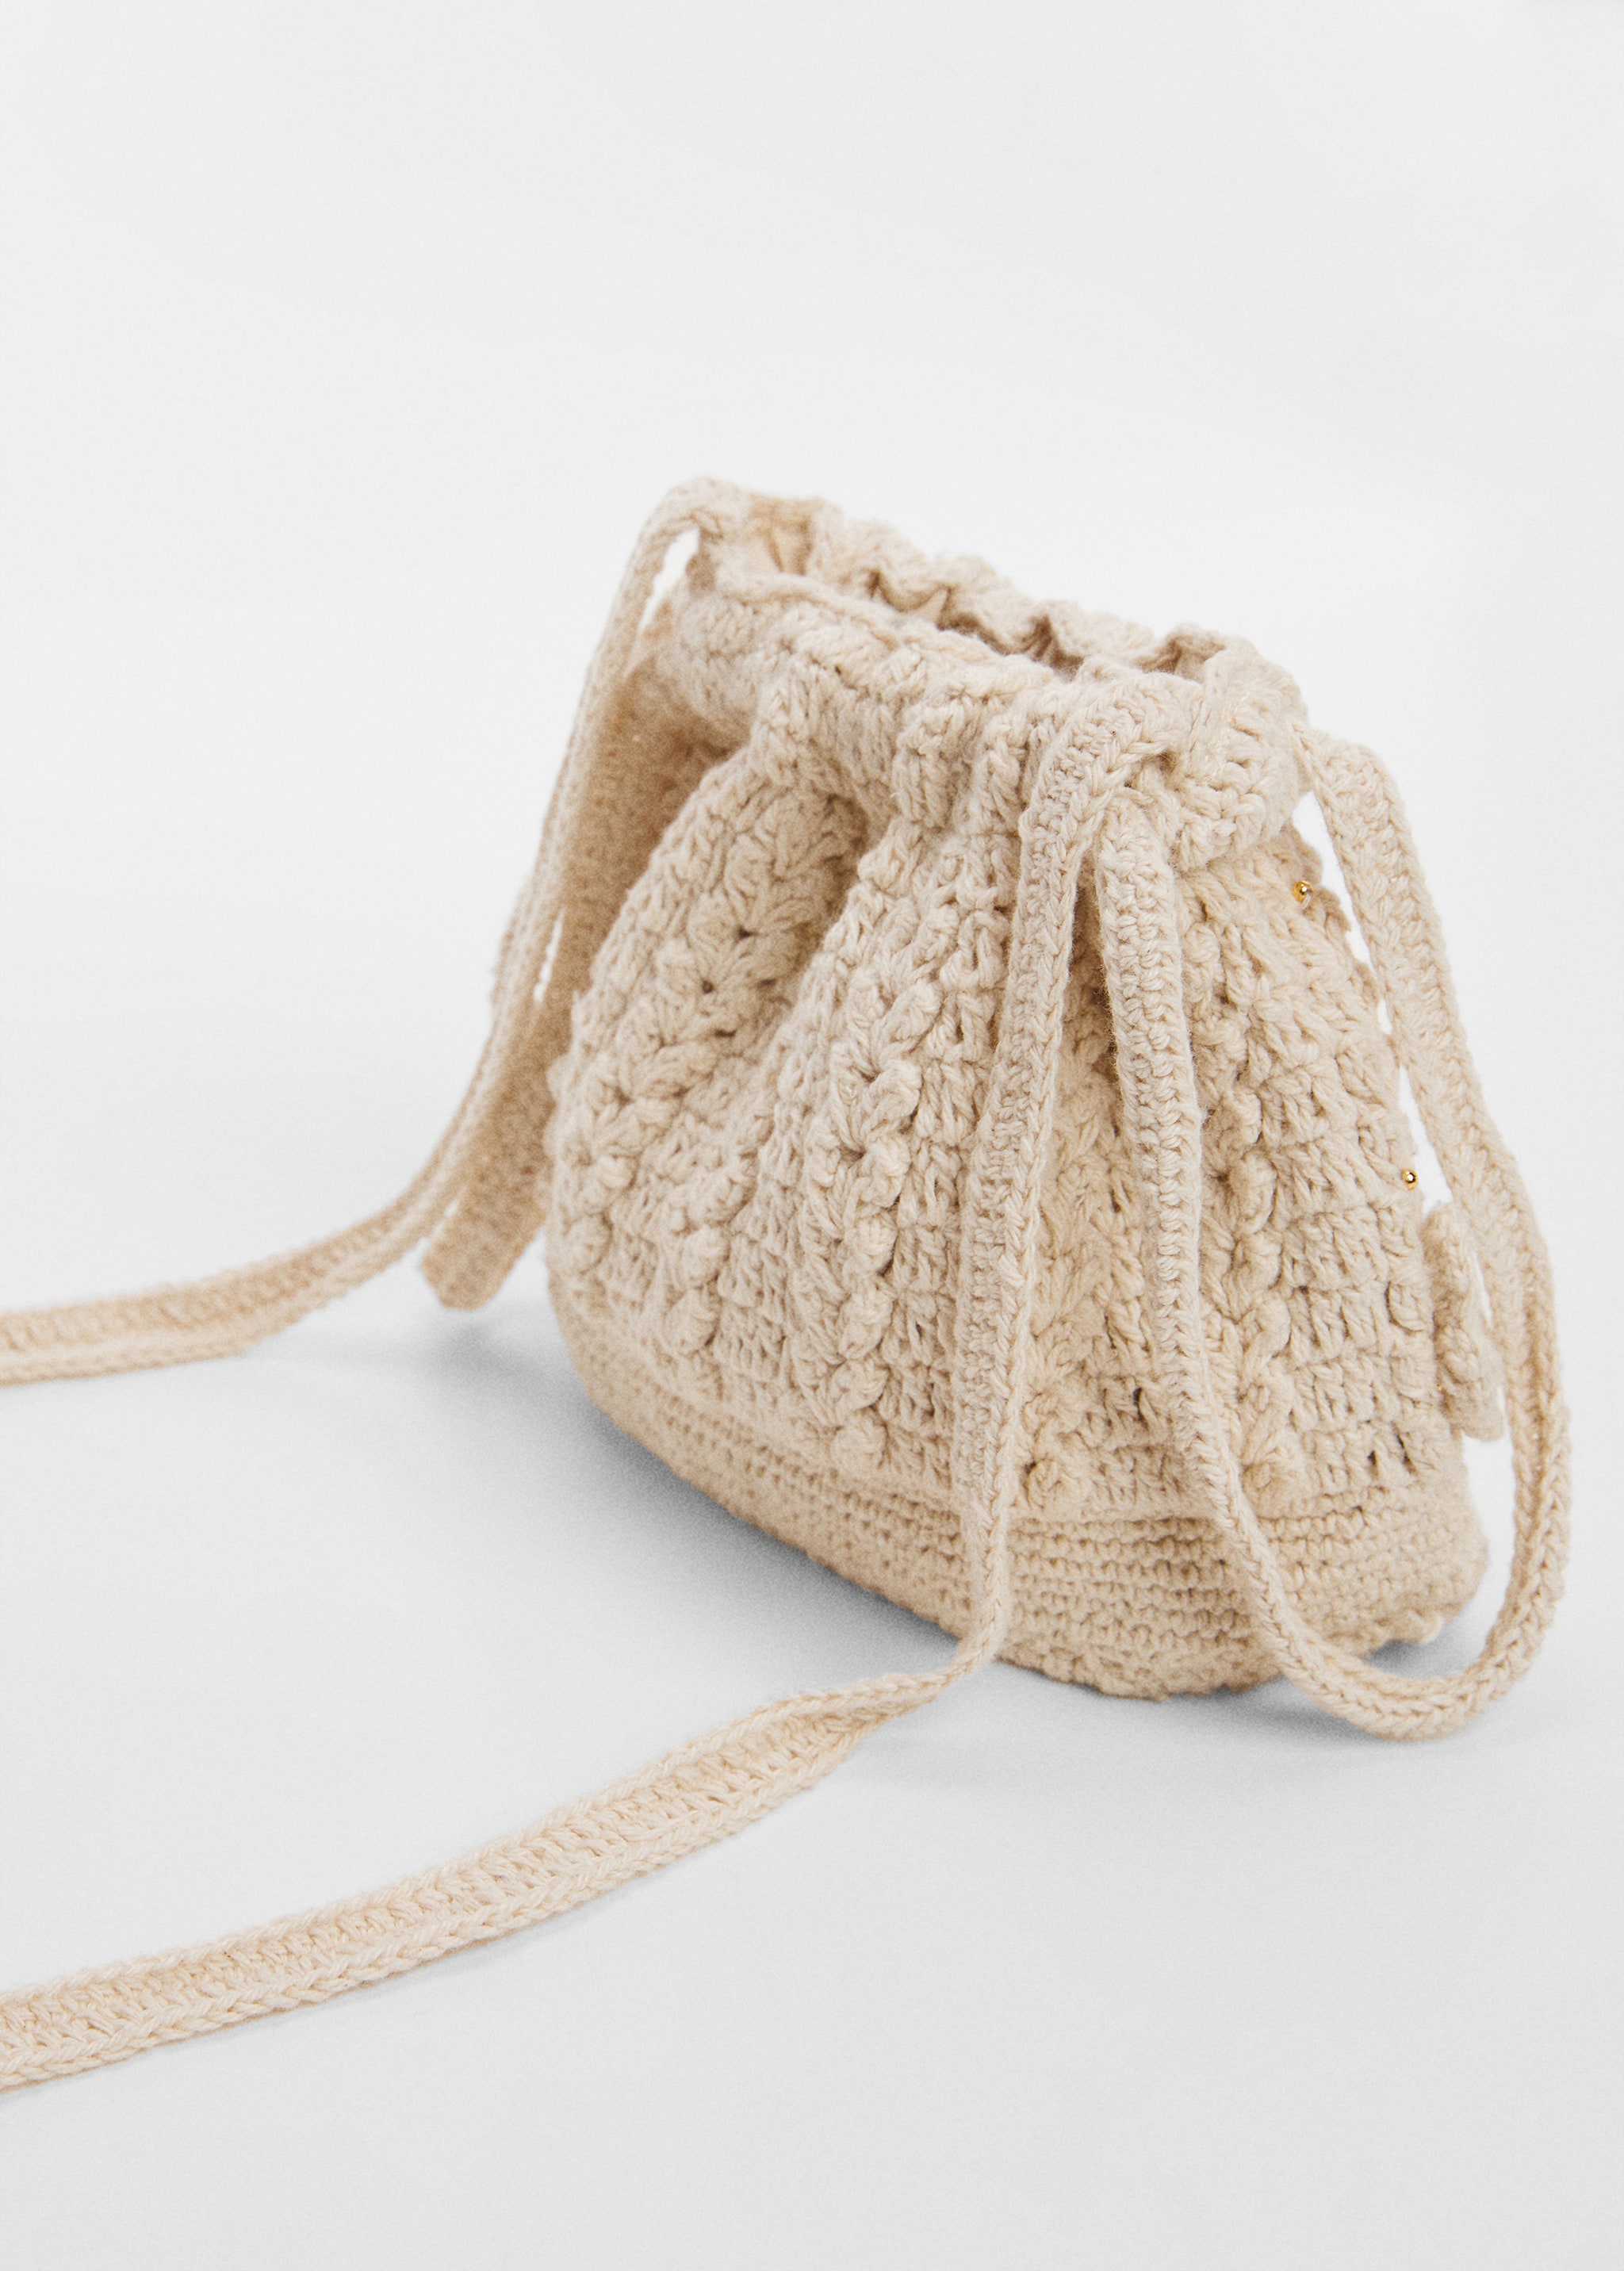 Floral crochet bag - Details of the article 1